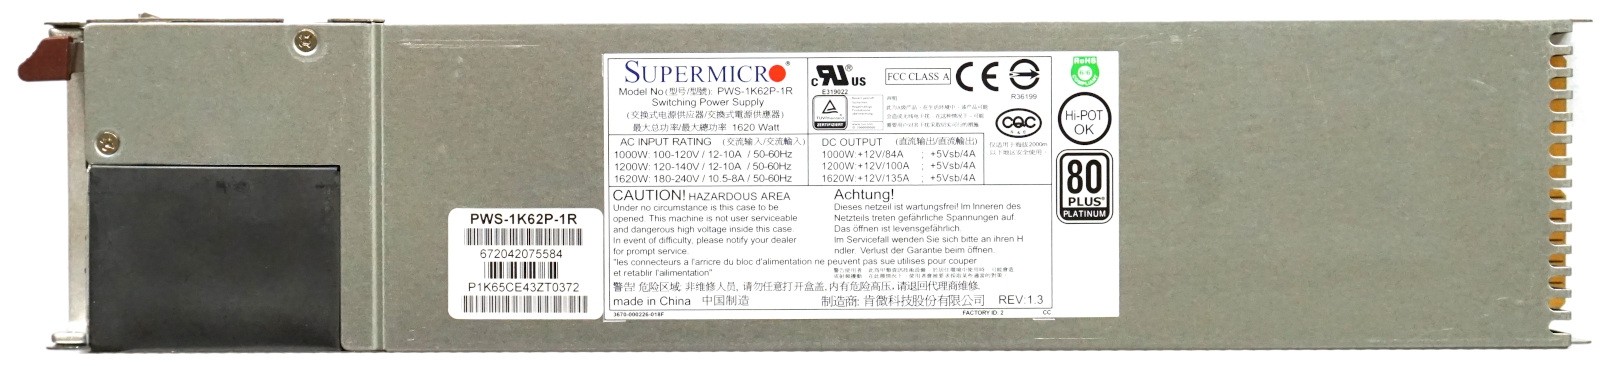 SuperMicro (PWS-1K62P-1R) CSE-847, CSE-848 1620W Hot-Swap PSU